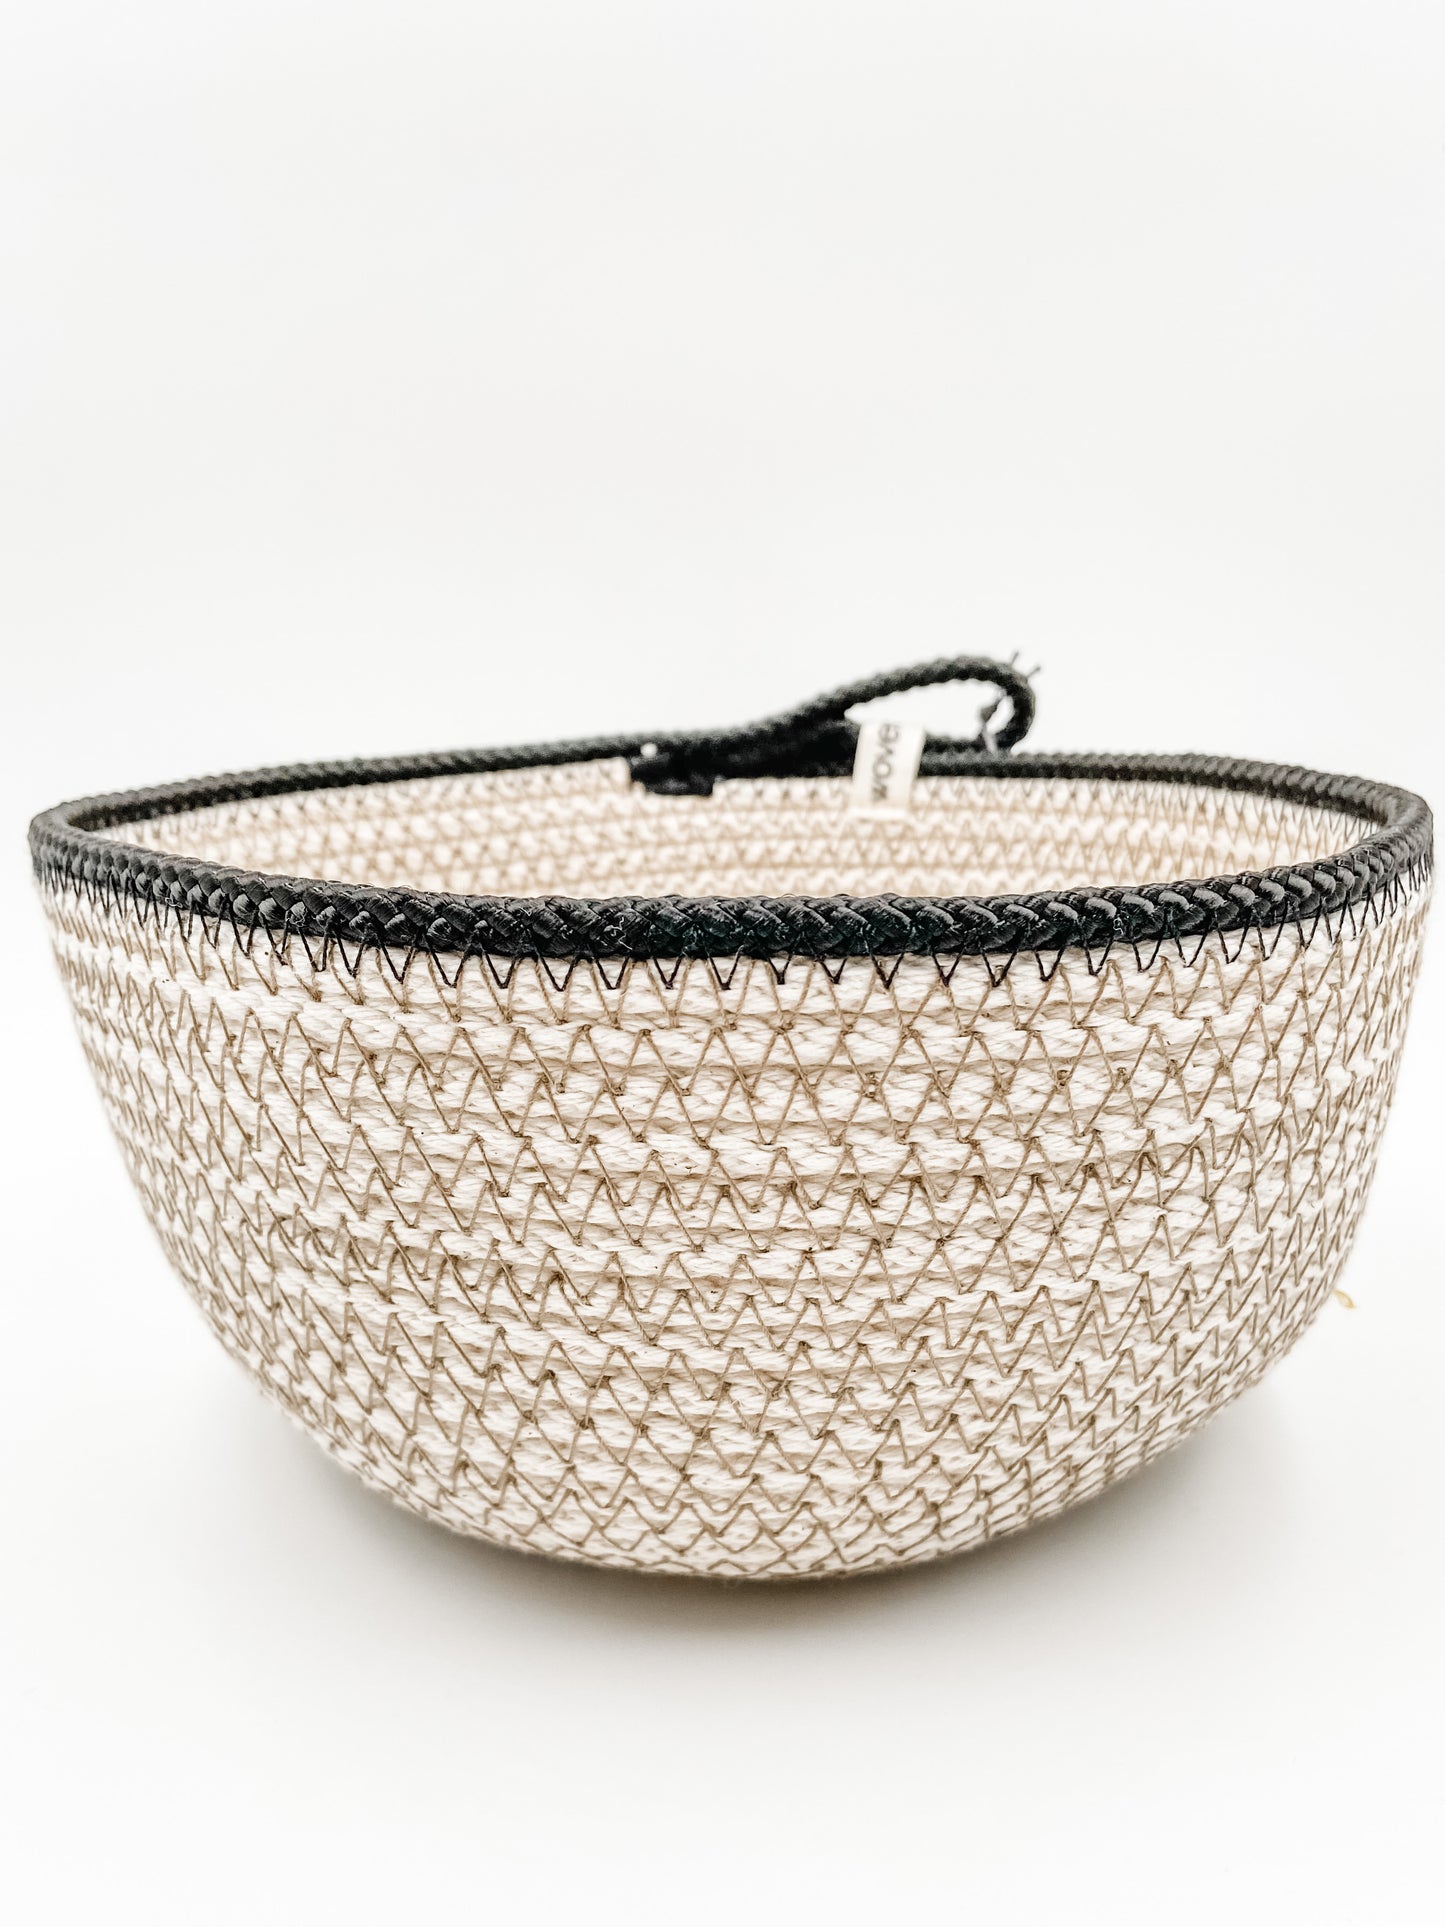 Sand Collection Basket - Salt and Branch